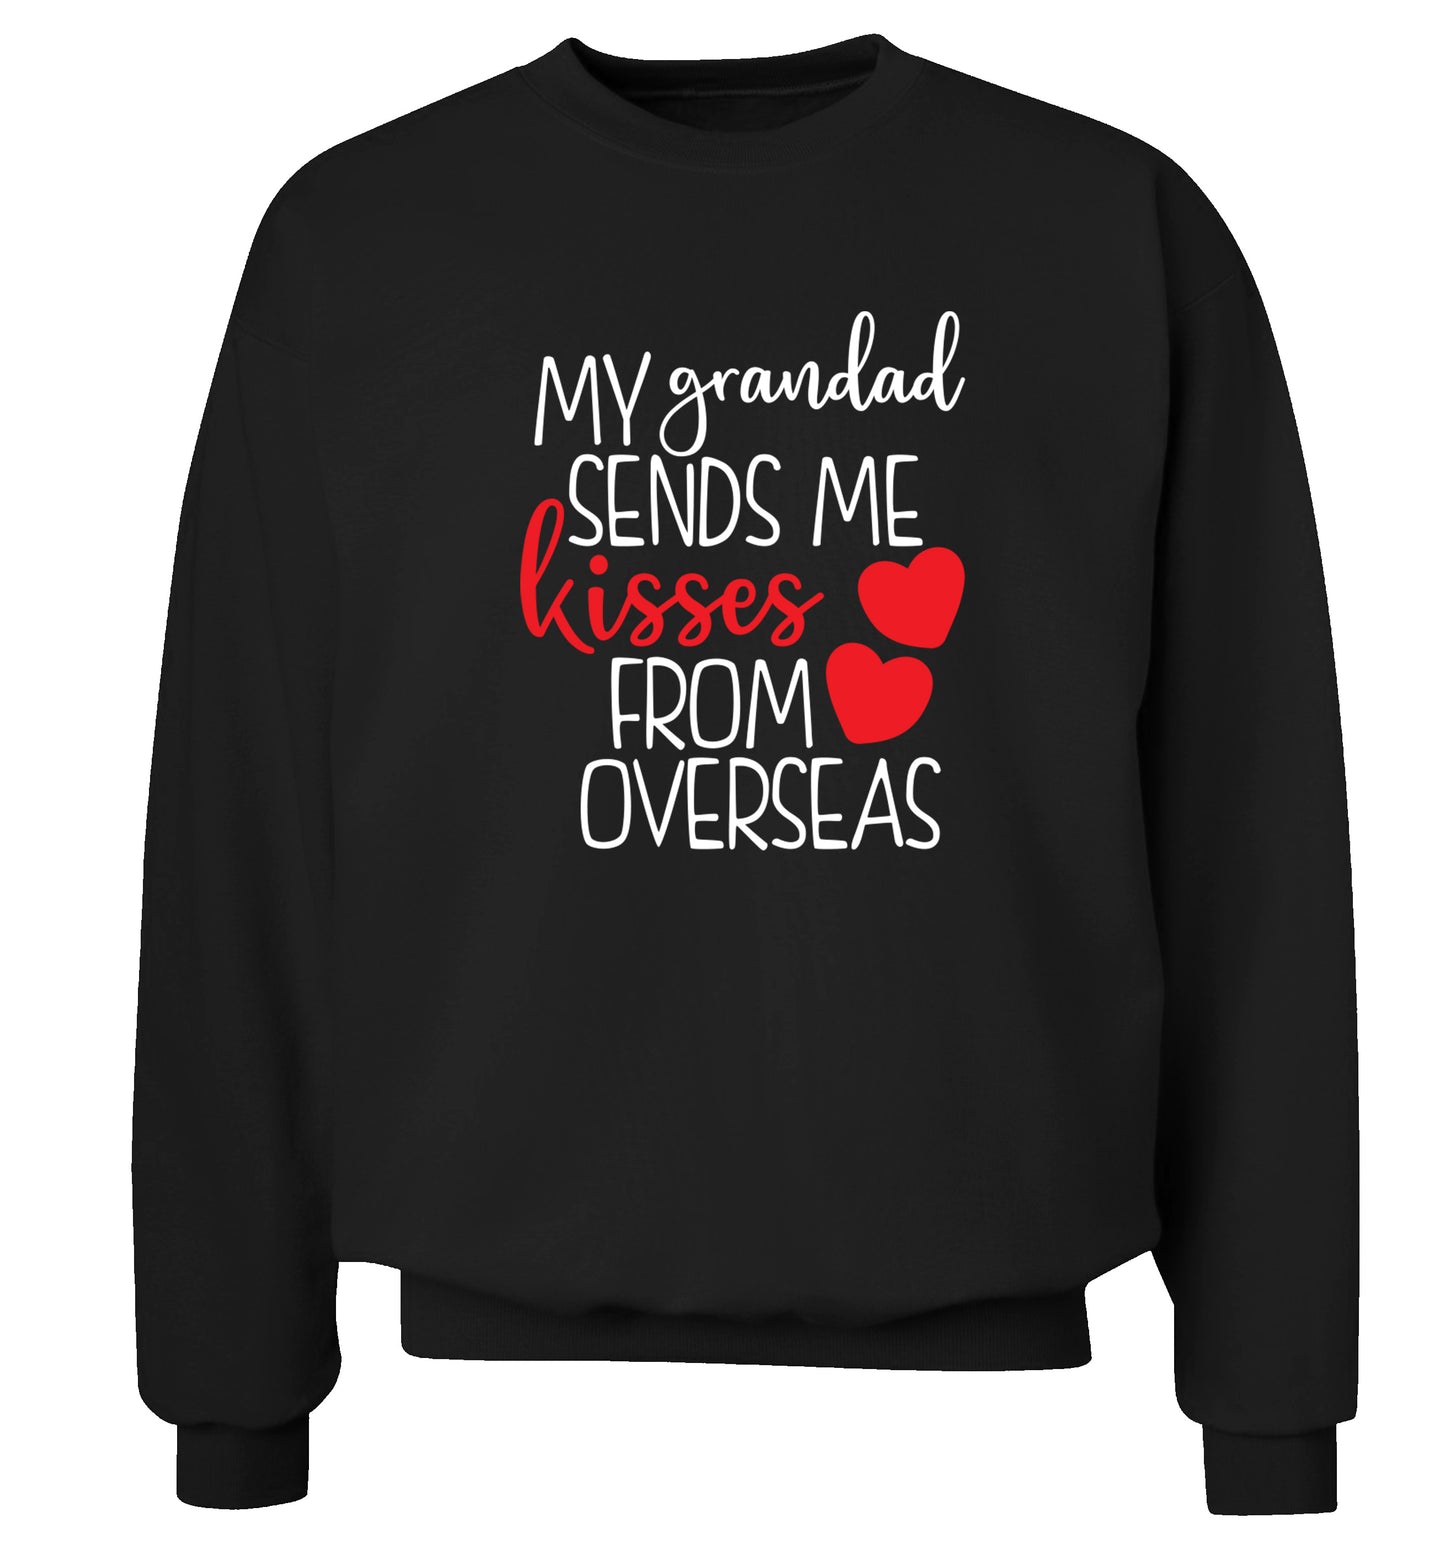 My Grandad sends me kisses from overseas Adult's unisex black Sweater 2XL